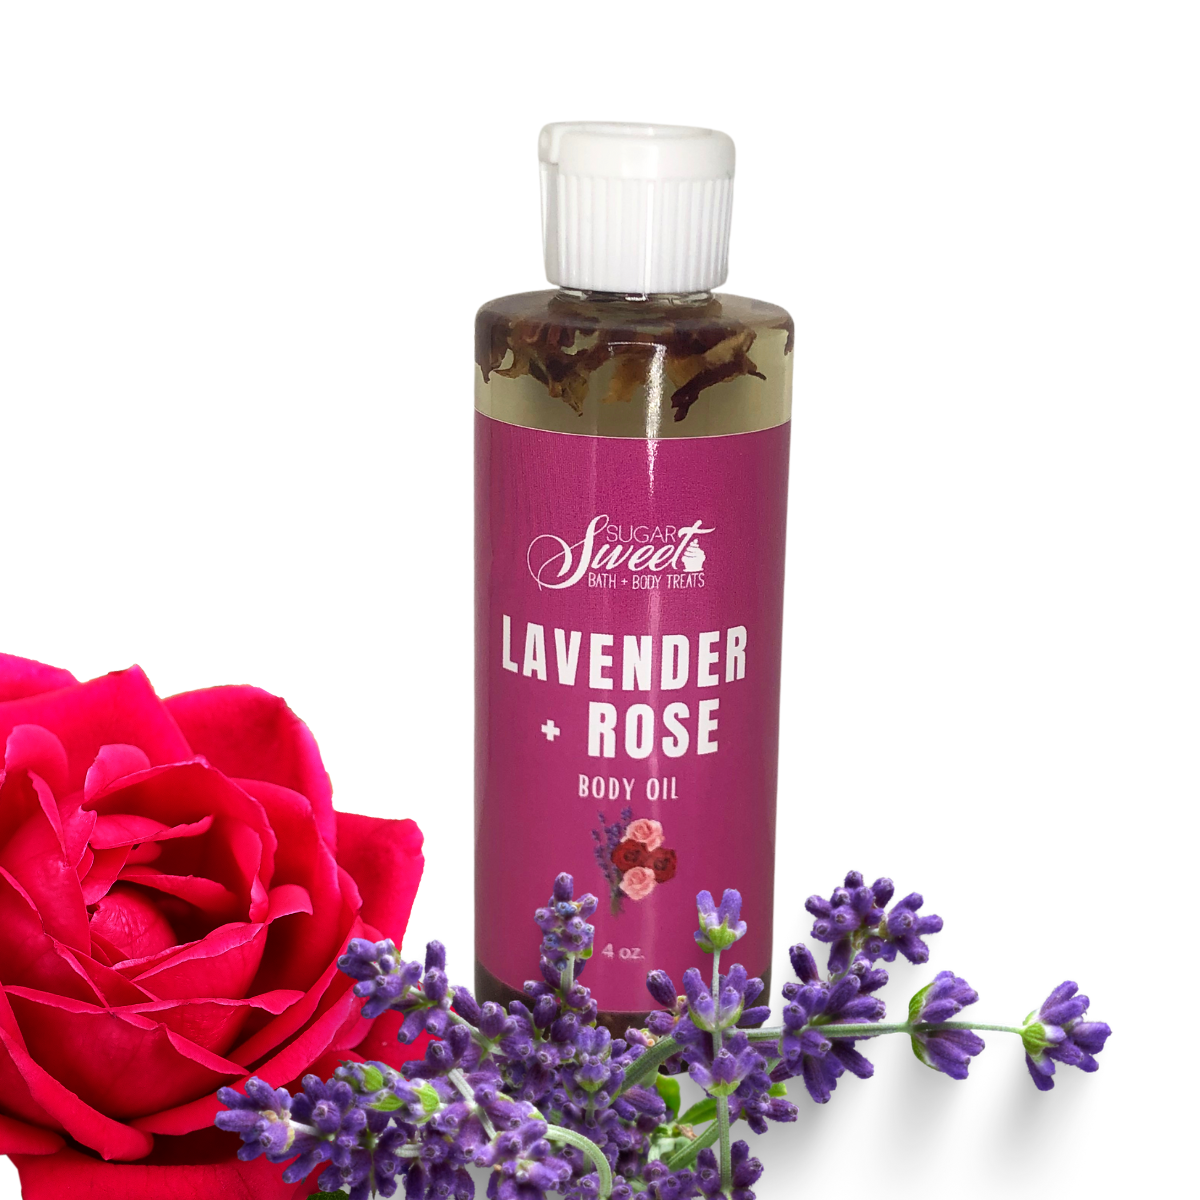 Lavender + Rose Body Oil